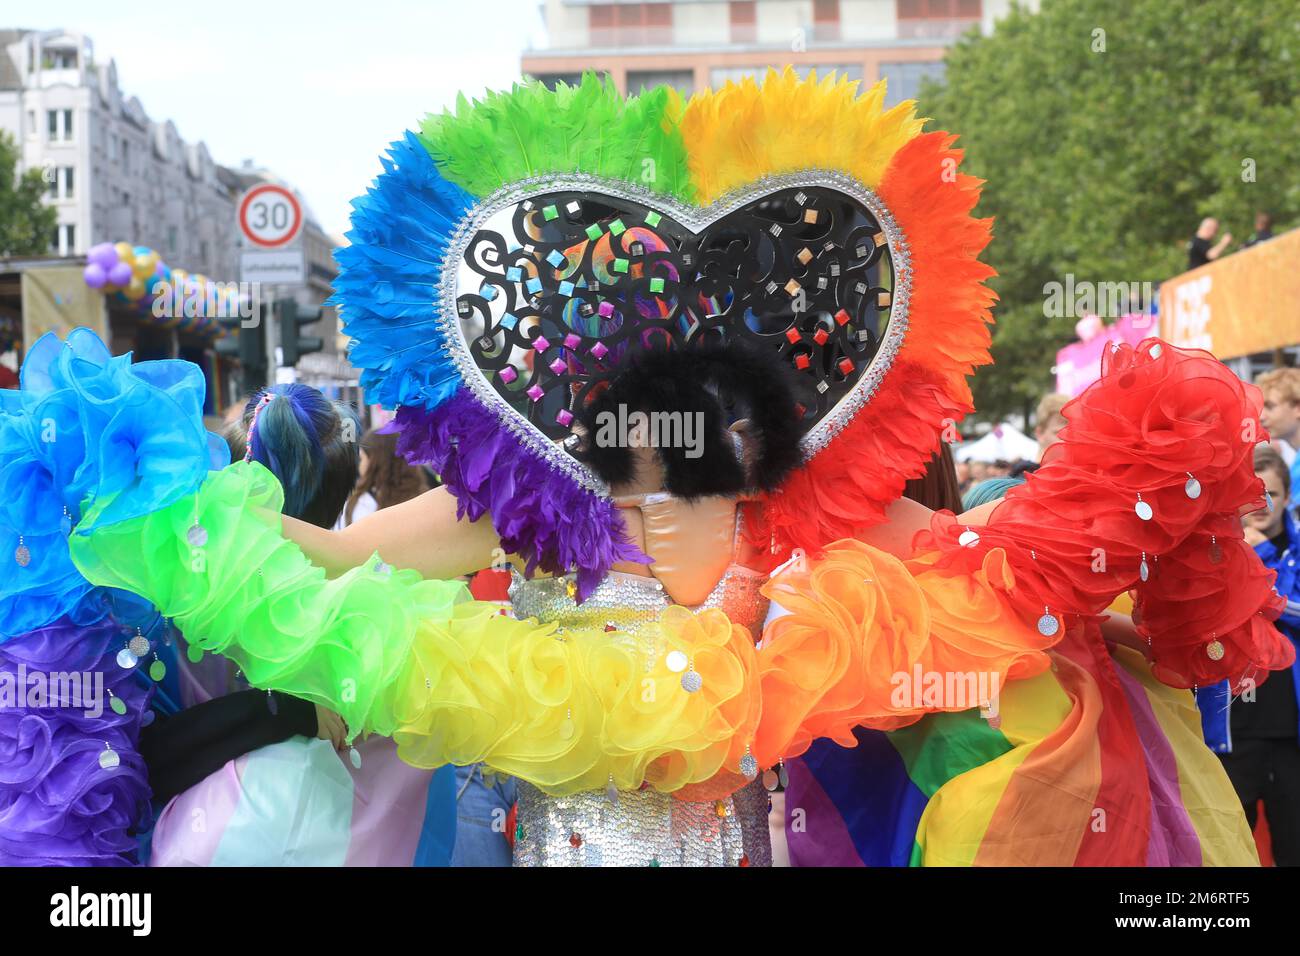 Christopher Street day, Berlin Pride, Berlin, Germany Stock Photo